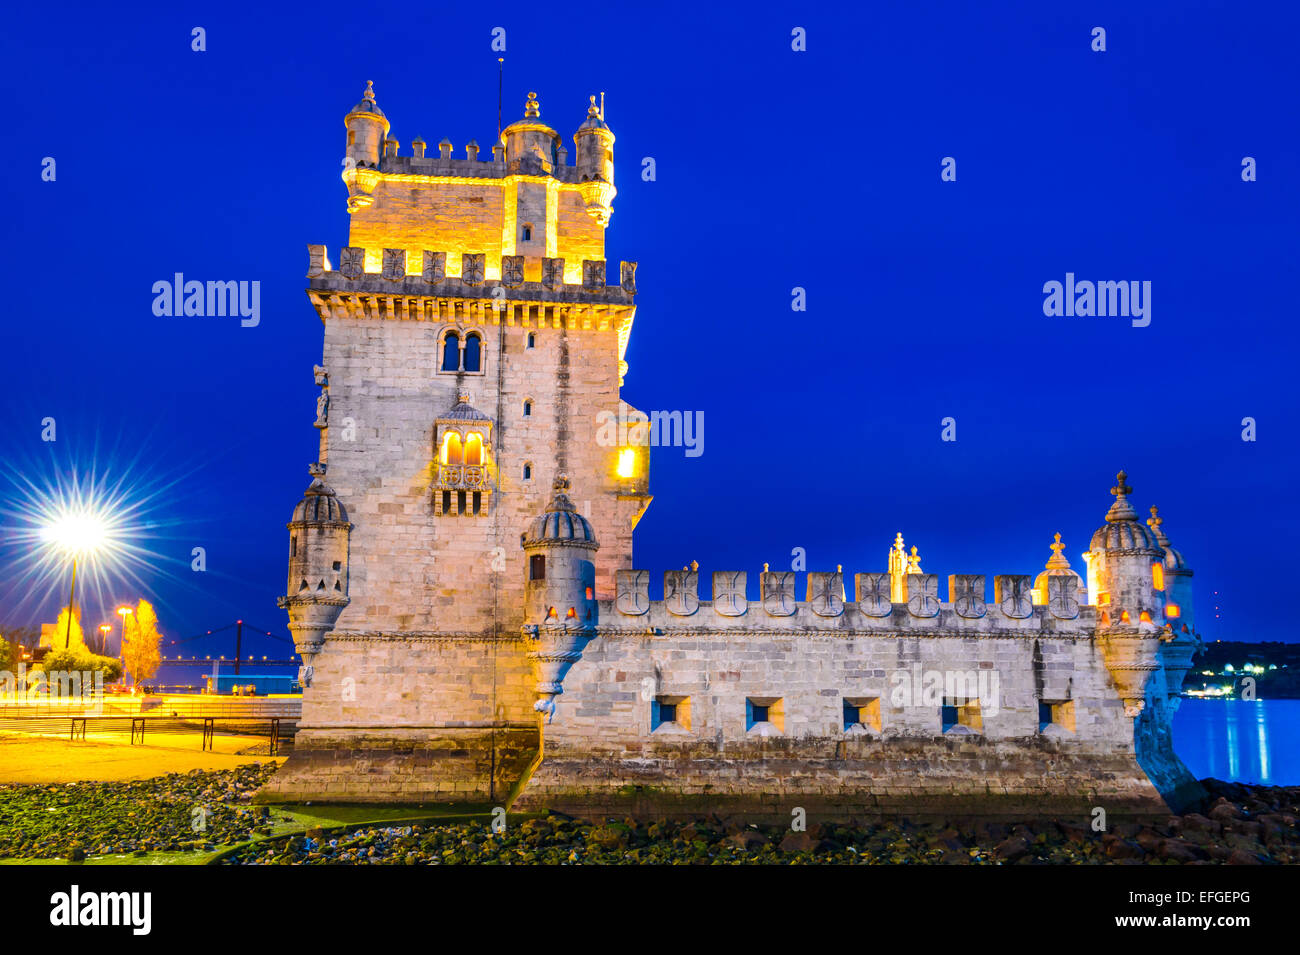 Lisbona, Portogallo. La Torre di Belem (la Torre de Belem) è una torre fortificata situata alla foce del fiume Tago. Foto Stock